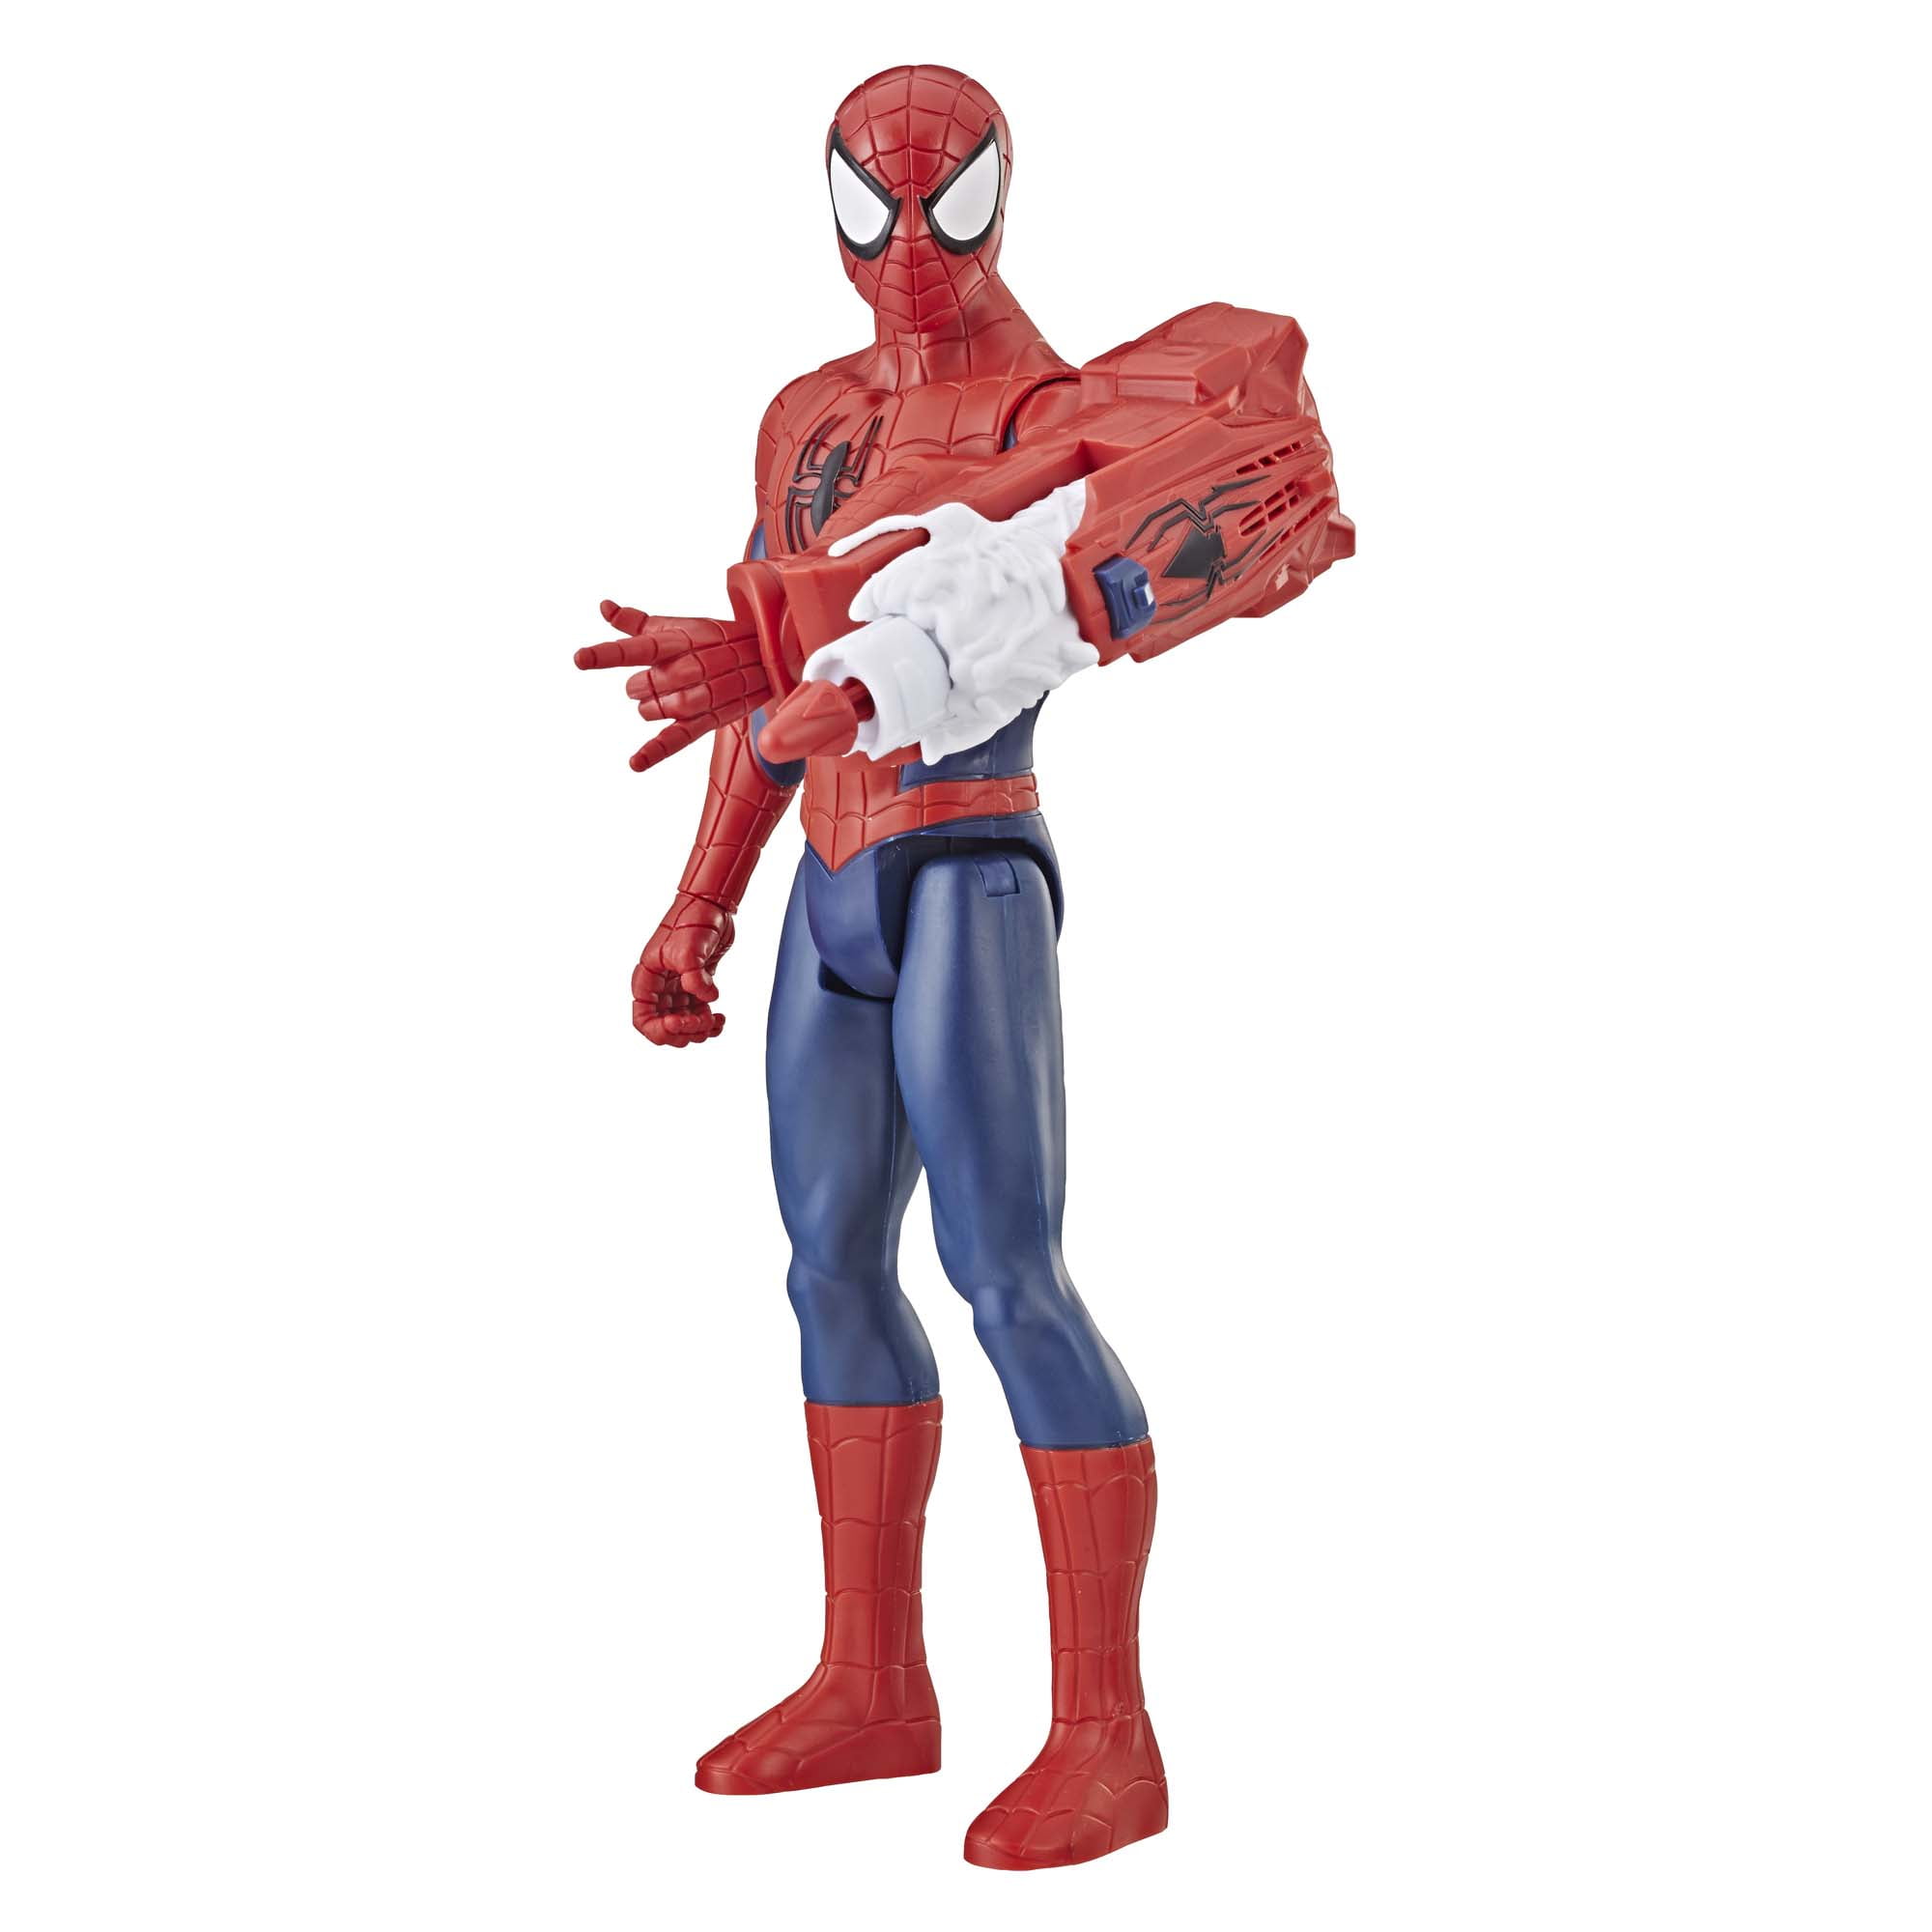 Spider-Wars Hydro-Man/& Aquatic Arsenal by Spider-Man